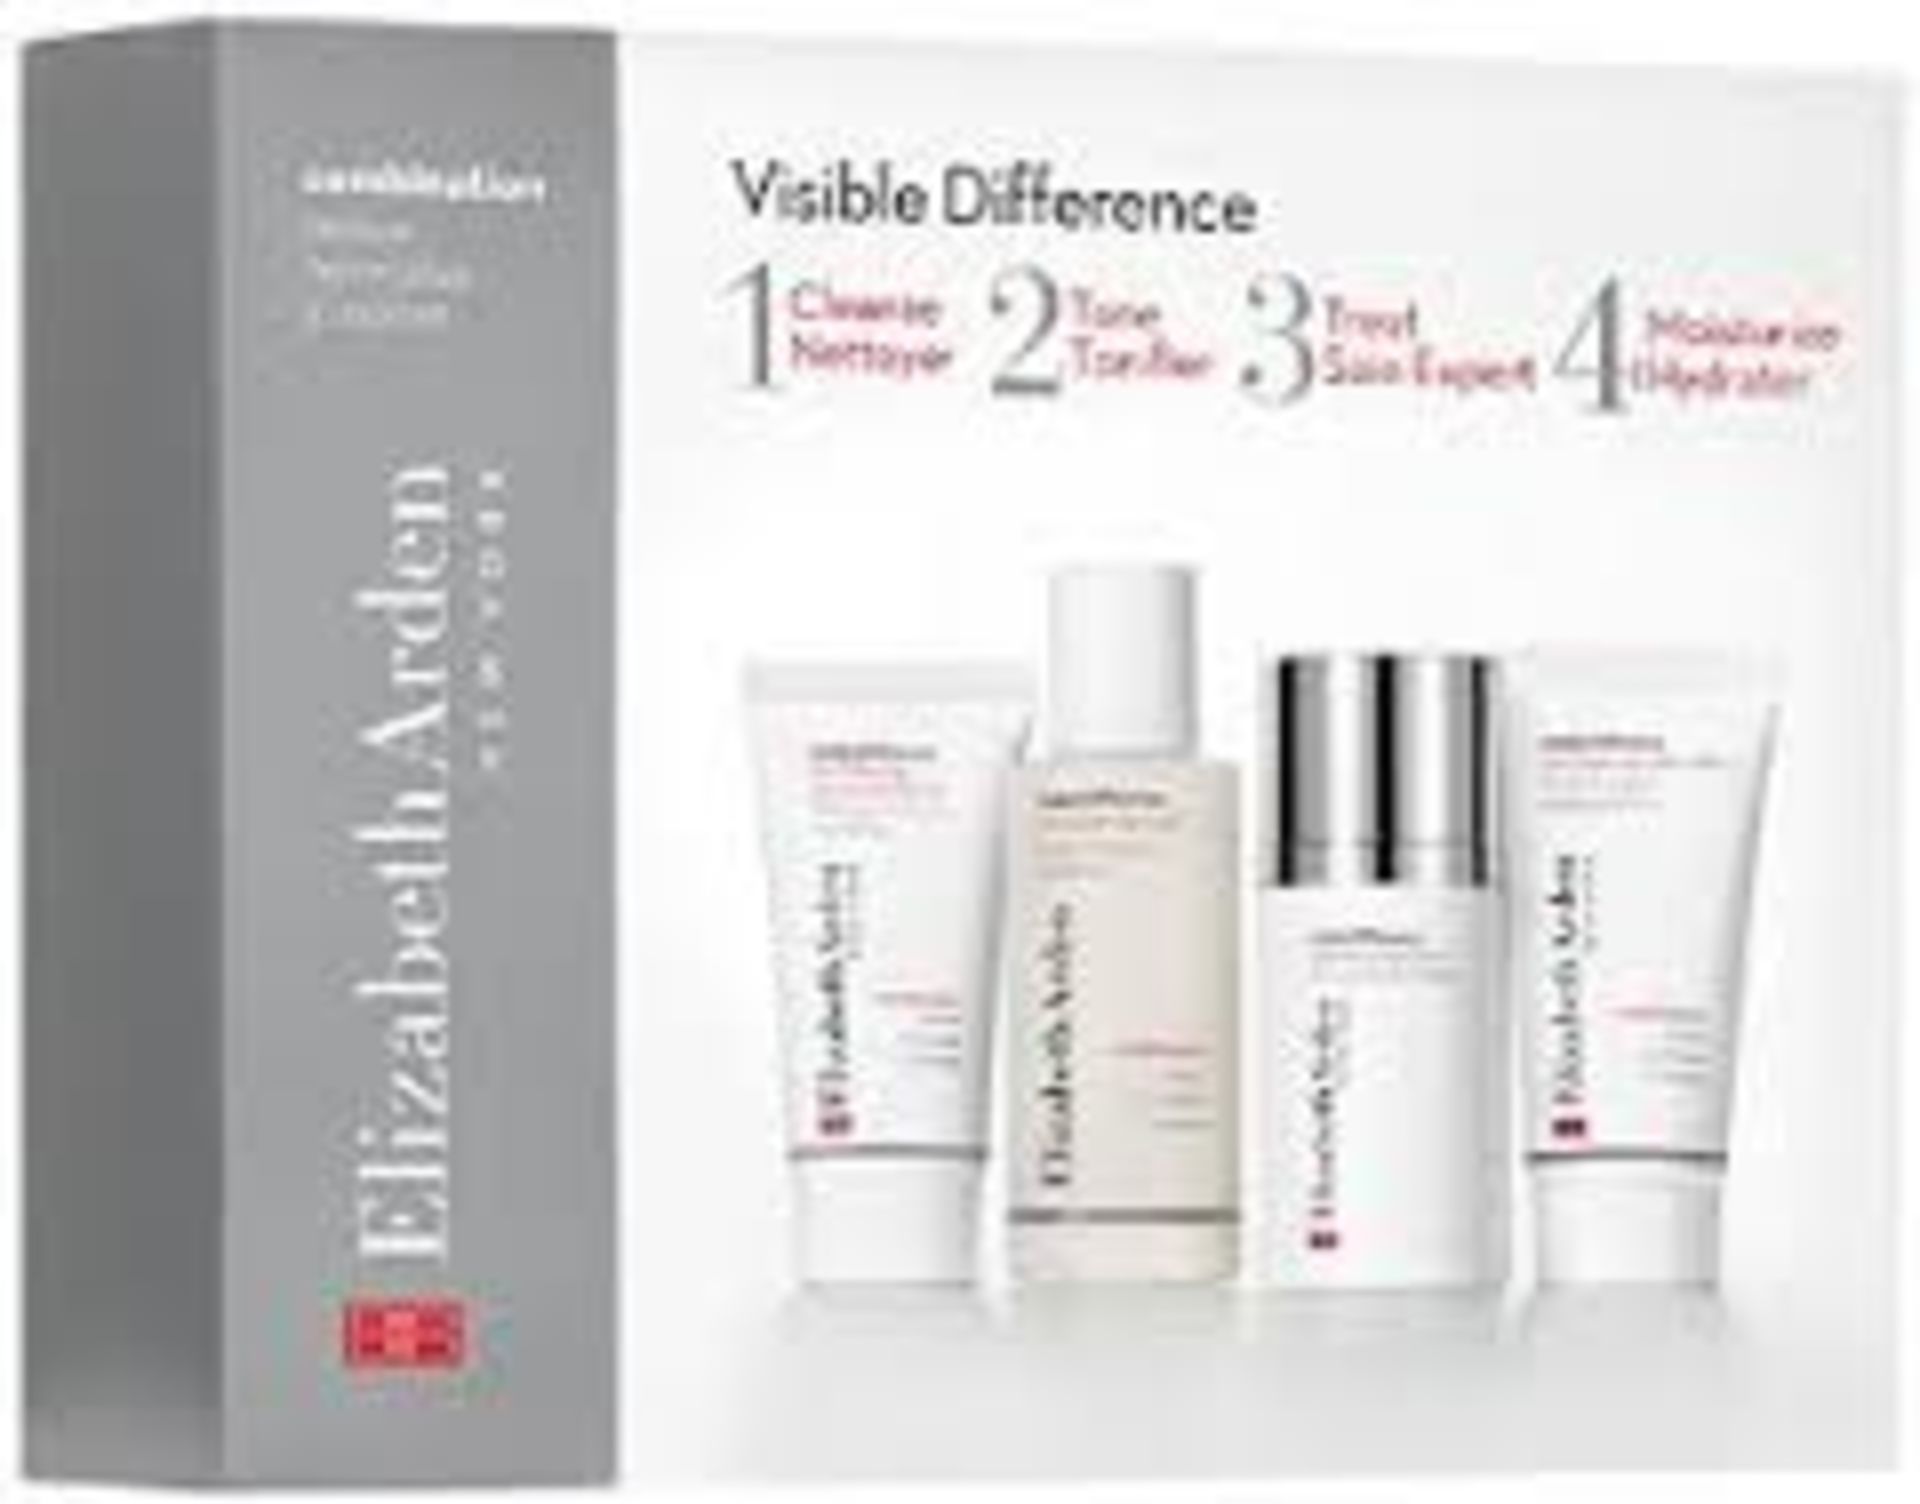 V *TRADE QTY* Brand New Elizabeth Arden Visible Difference 4 Step Skin Care Set Includes Clenser,